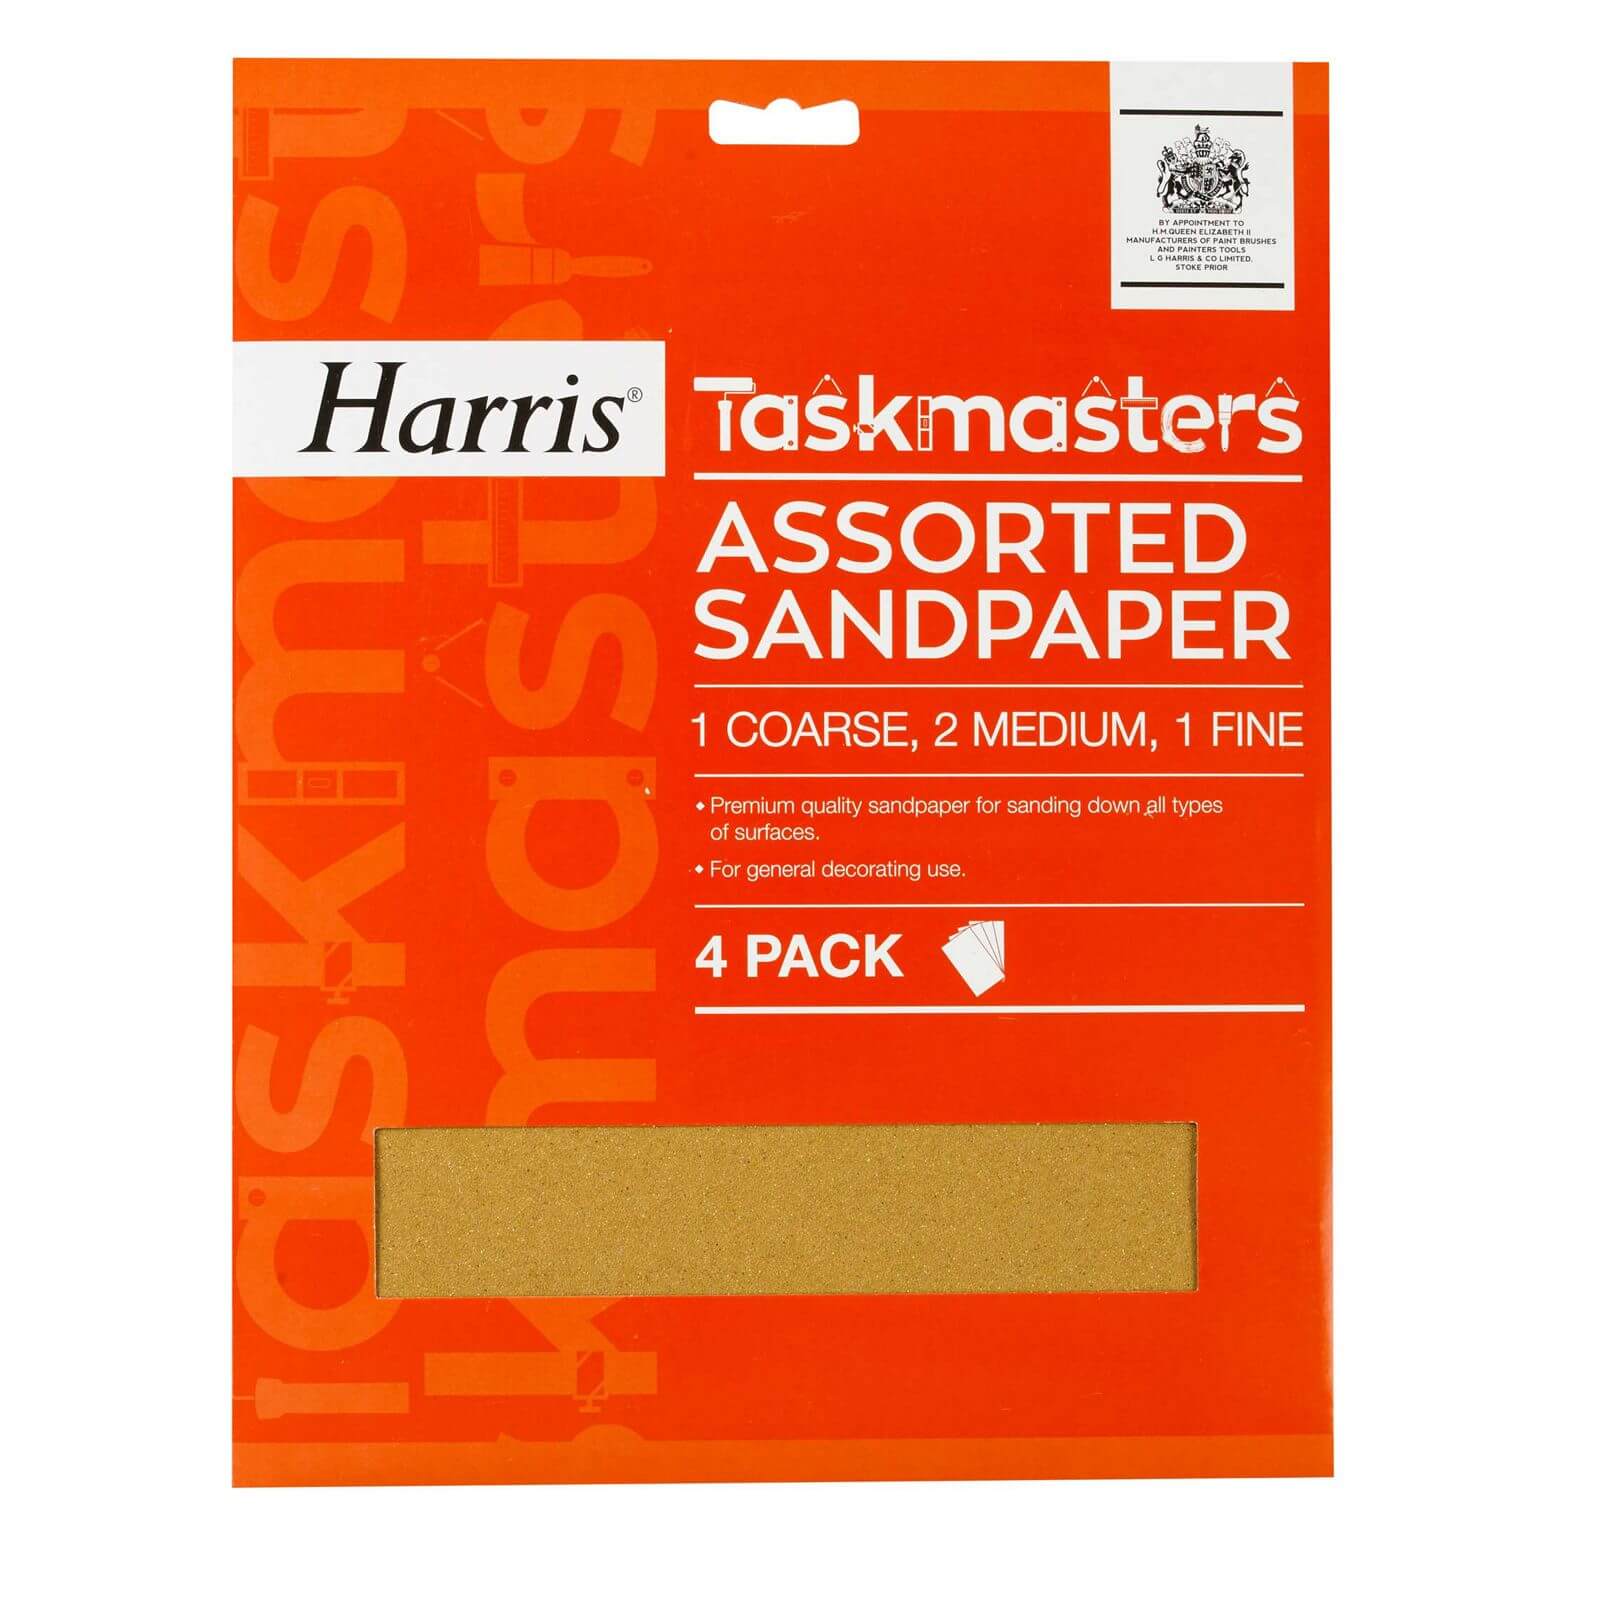 Harris Taskmasters Assorted Sandpaper - 4 Pack